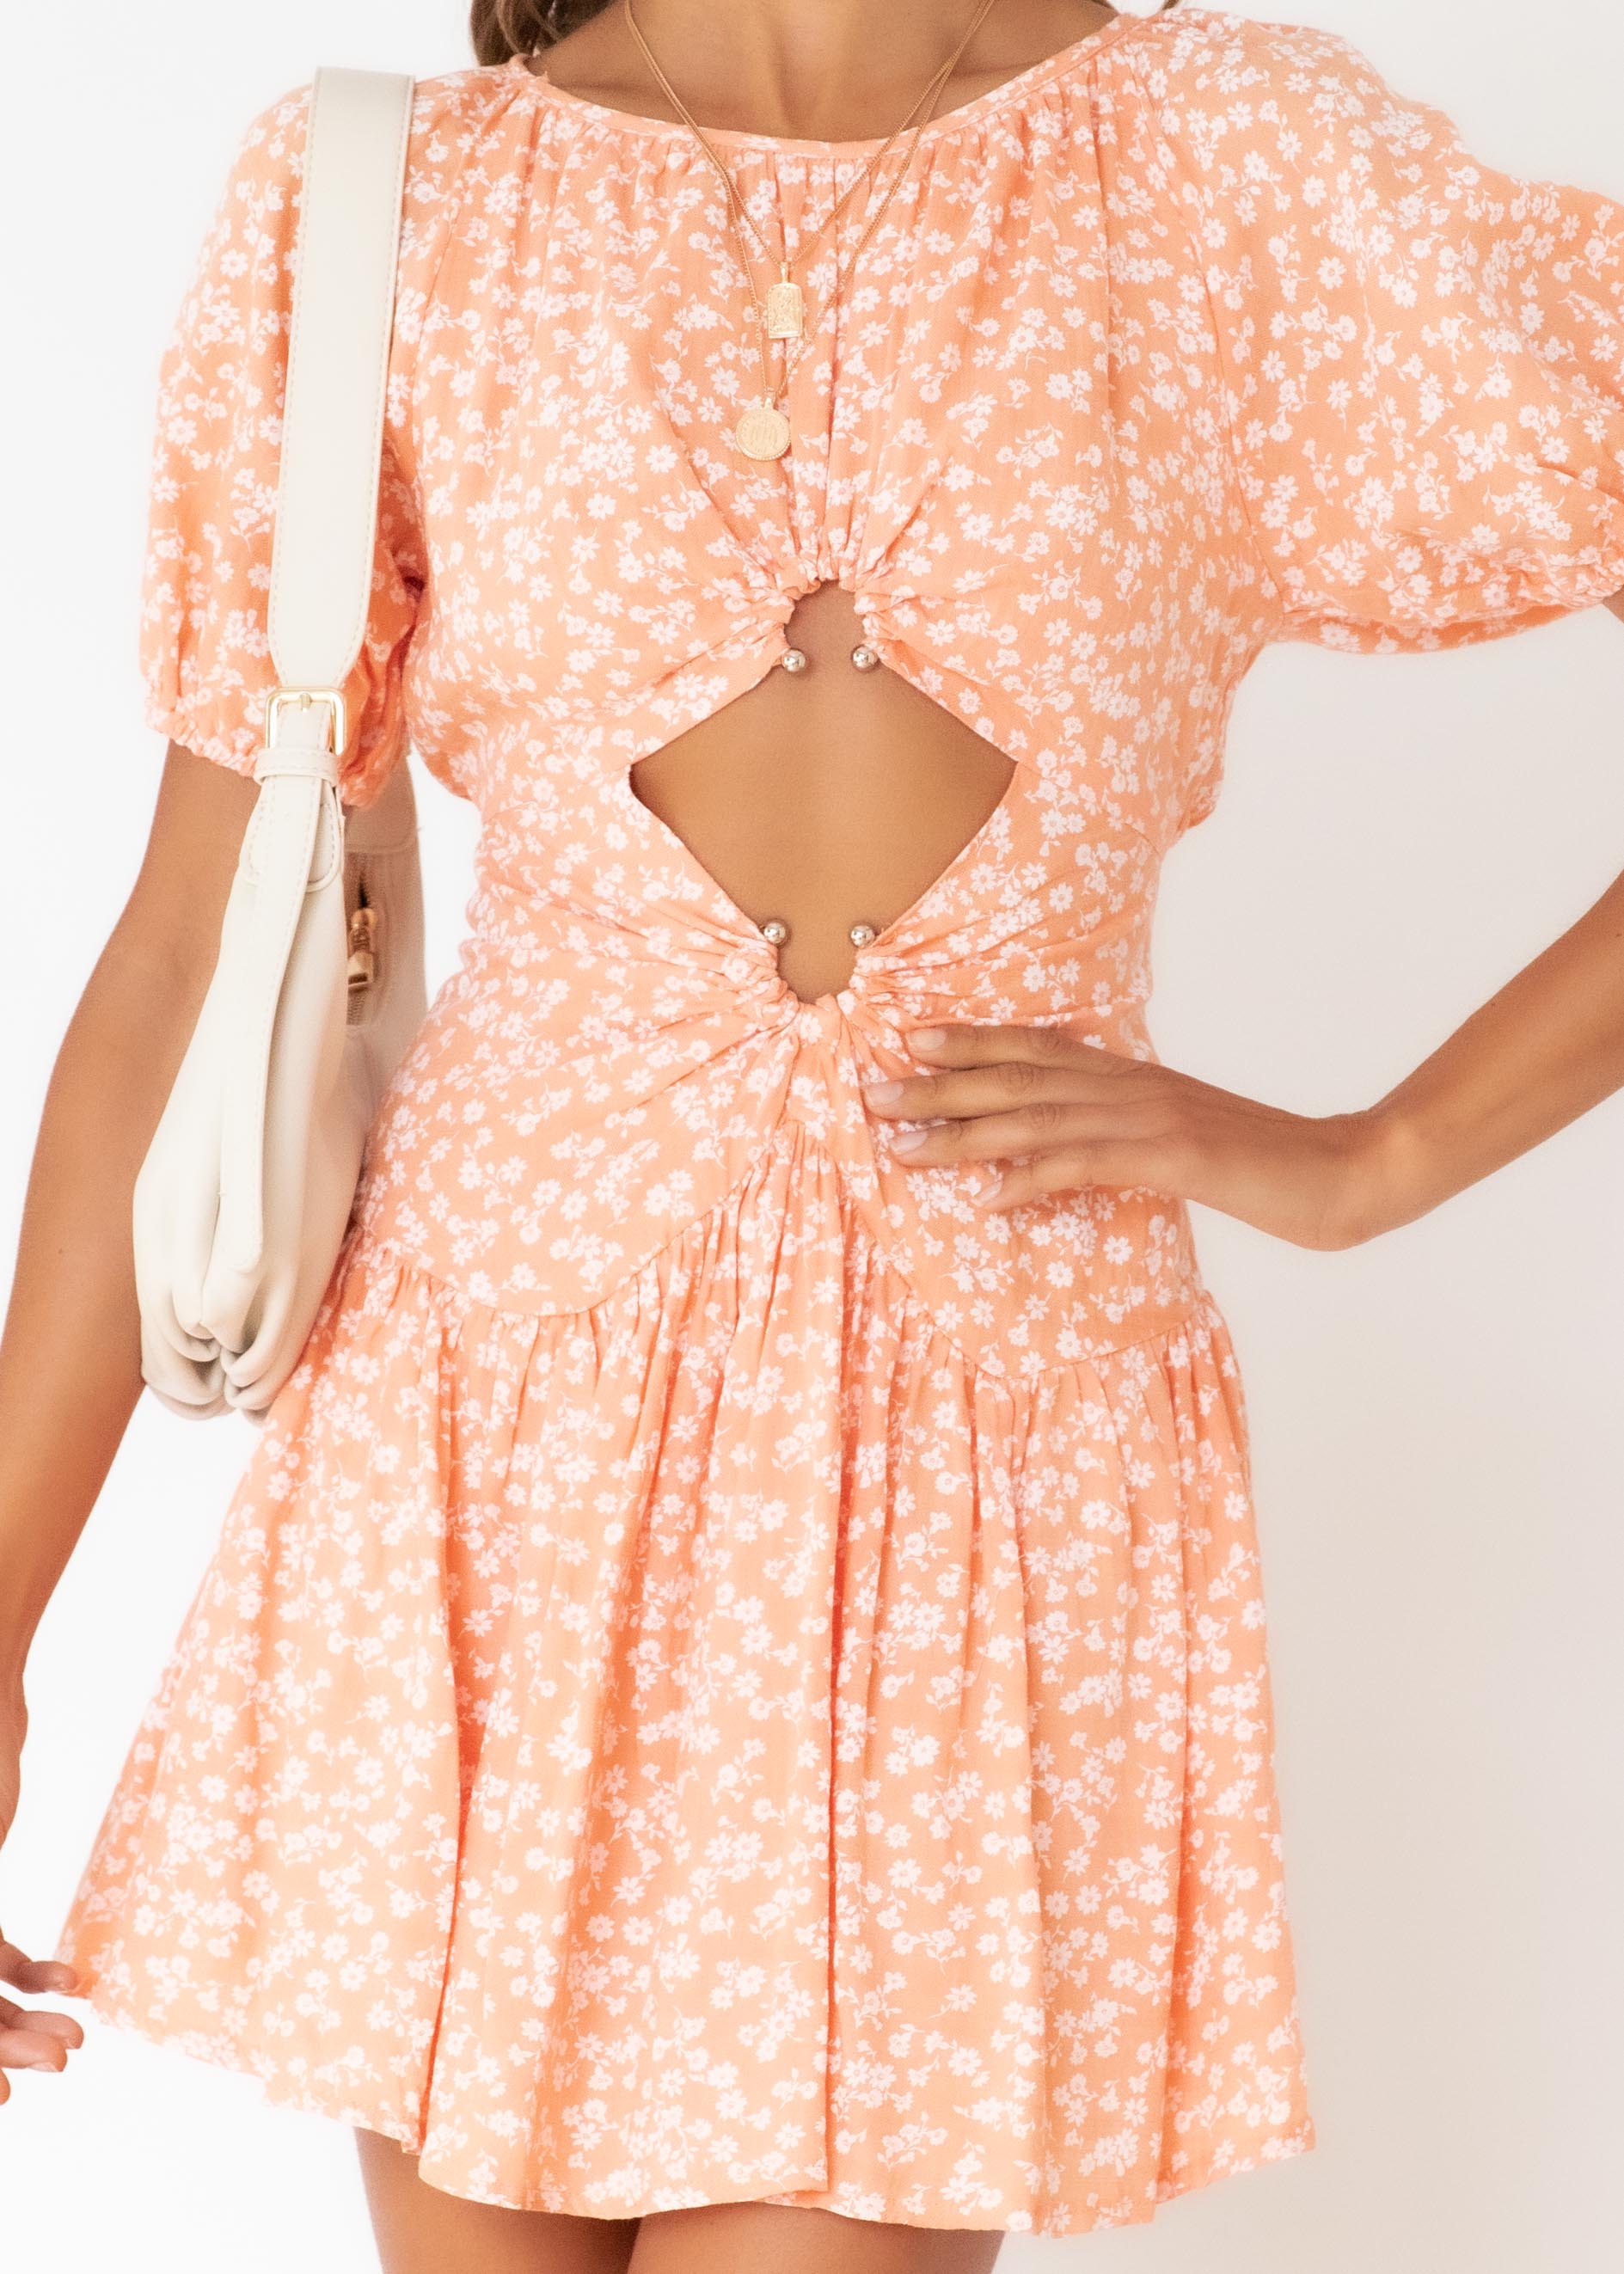 Latiana Dress - Peach Flowers